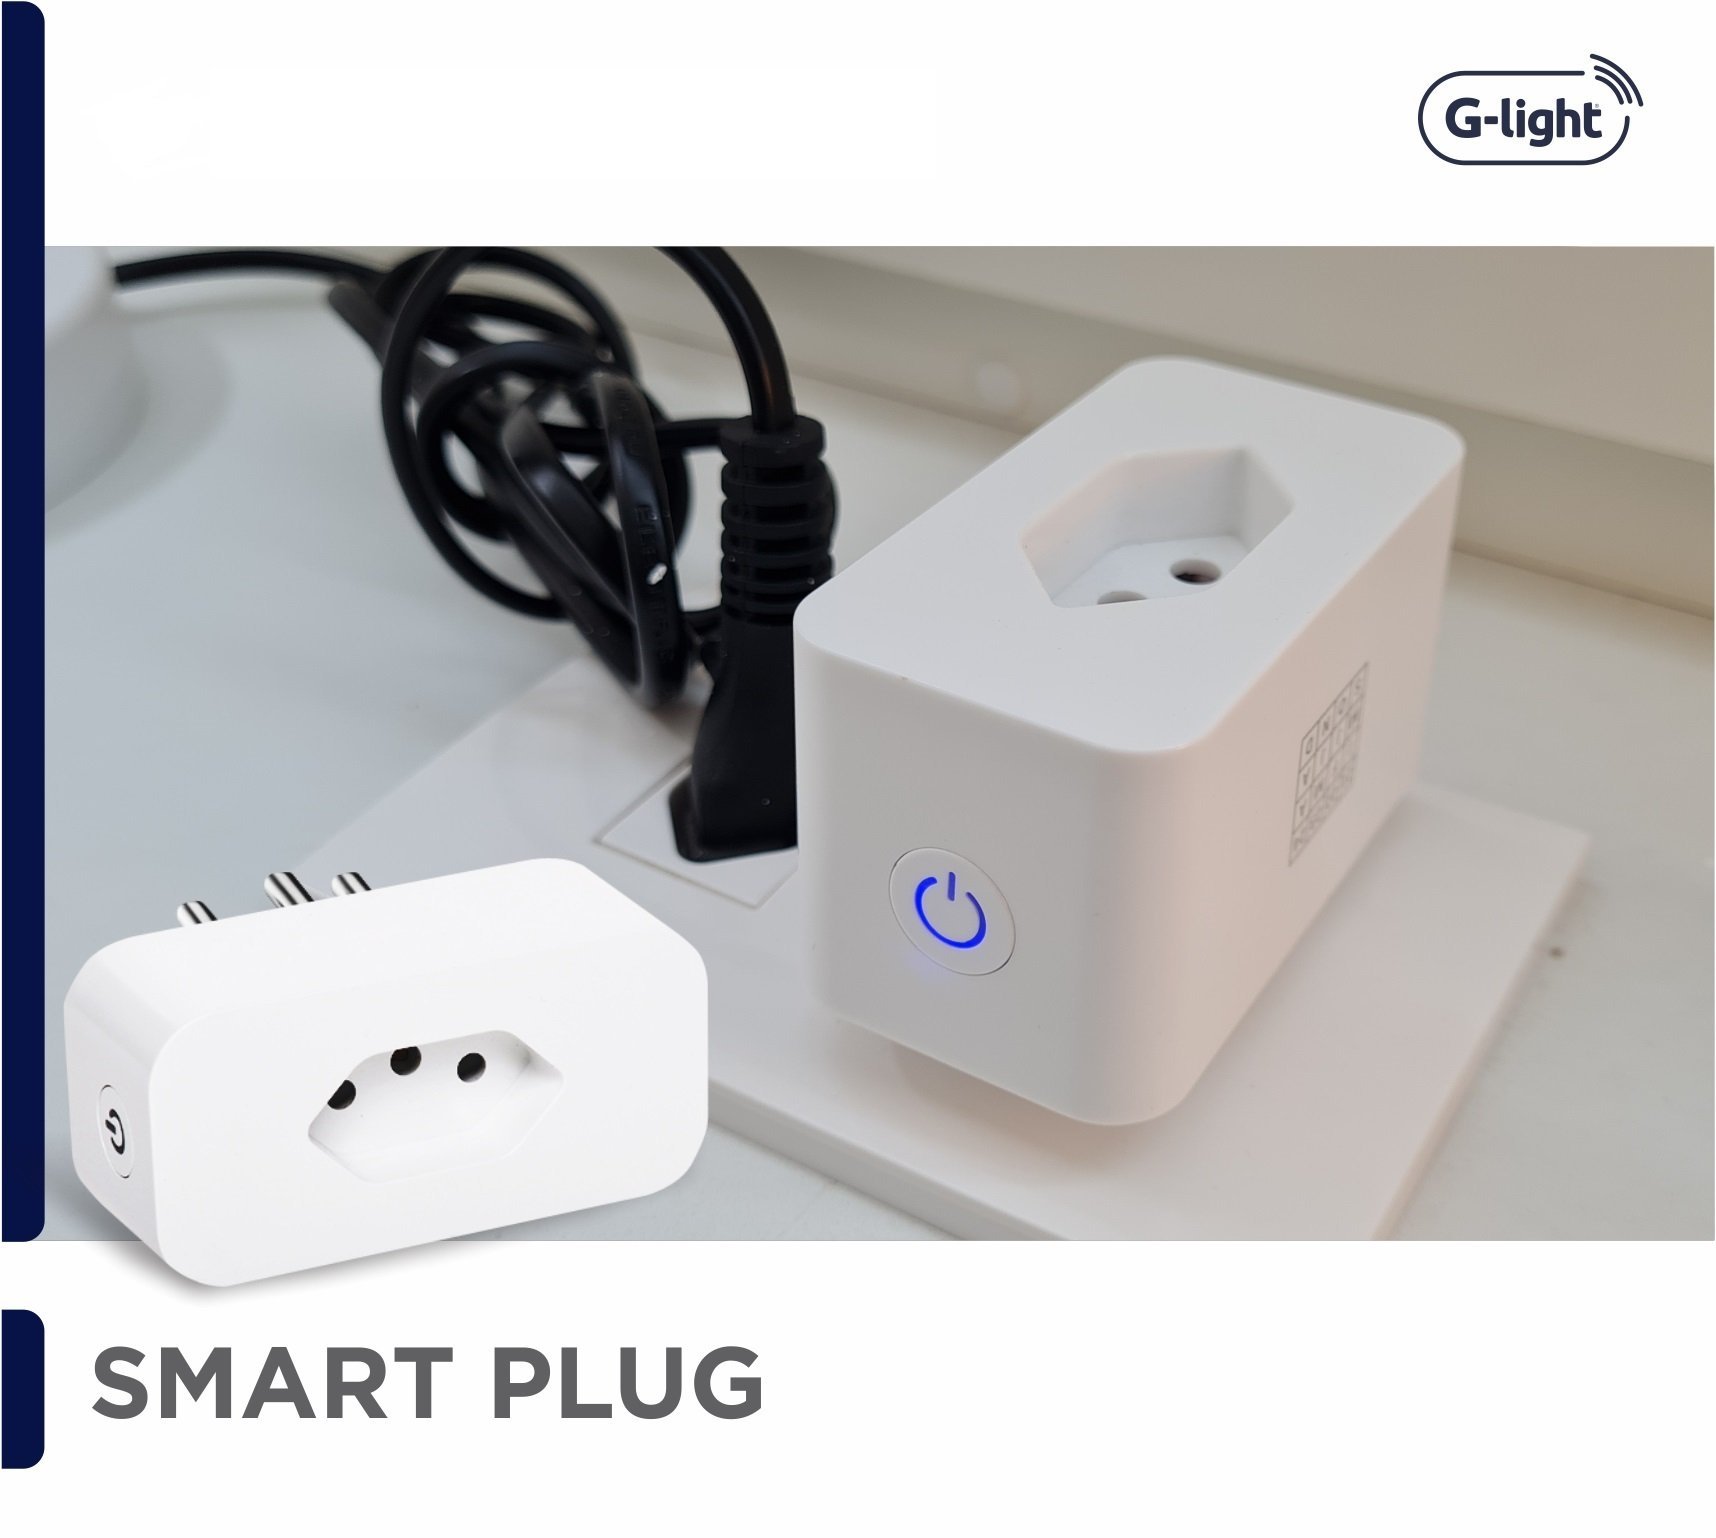 Smart Plug G-light 16a Branco - 2